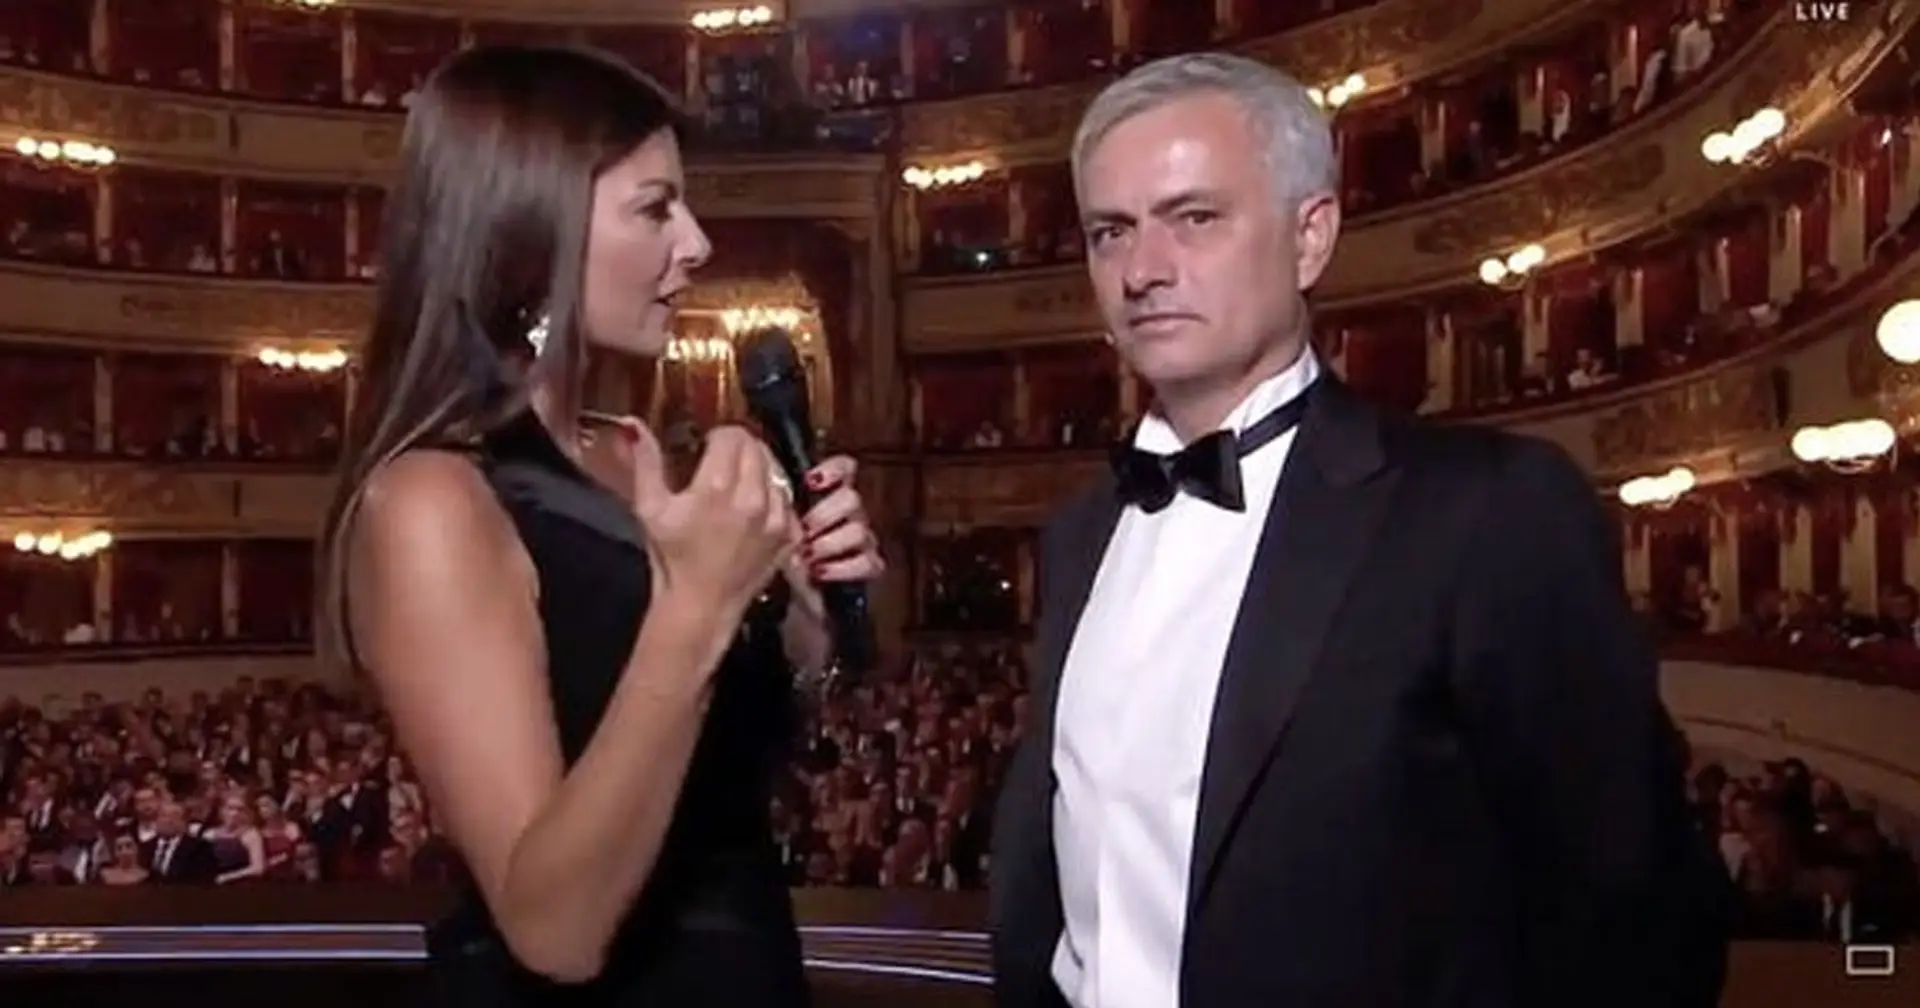 'She's proof aliens exist': Buffon's wife asks Jose Mourinho about aliens - fails big time!